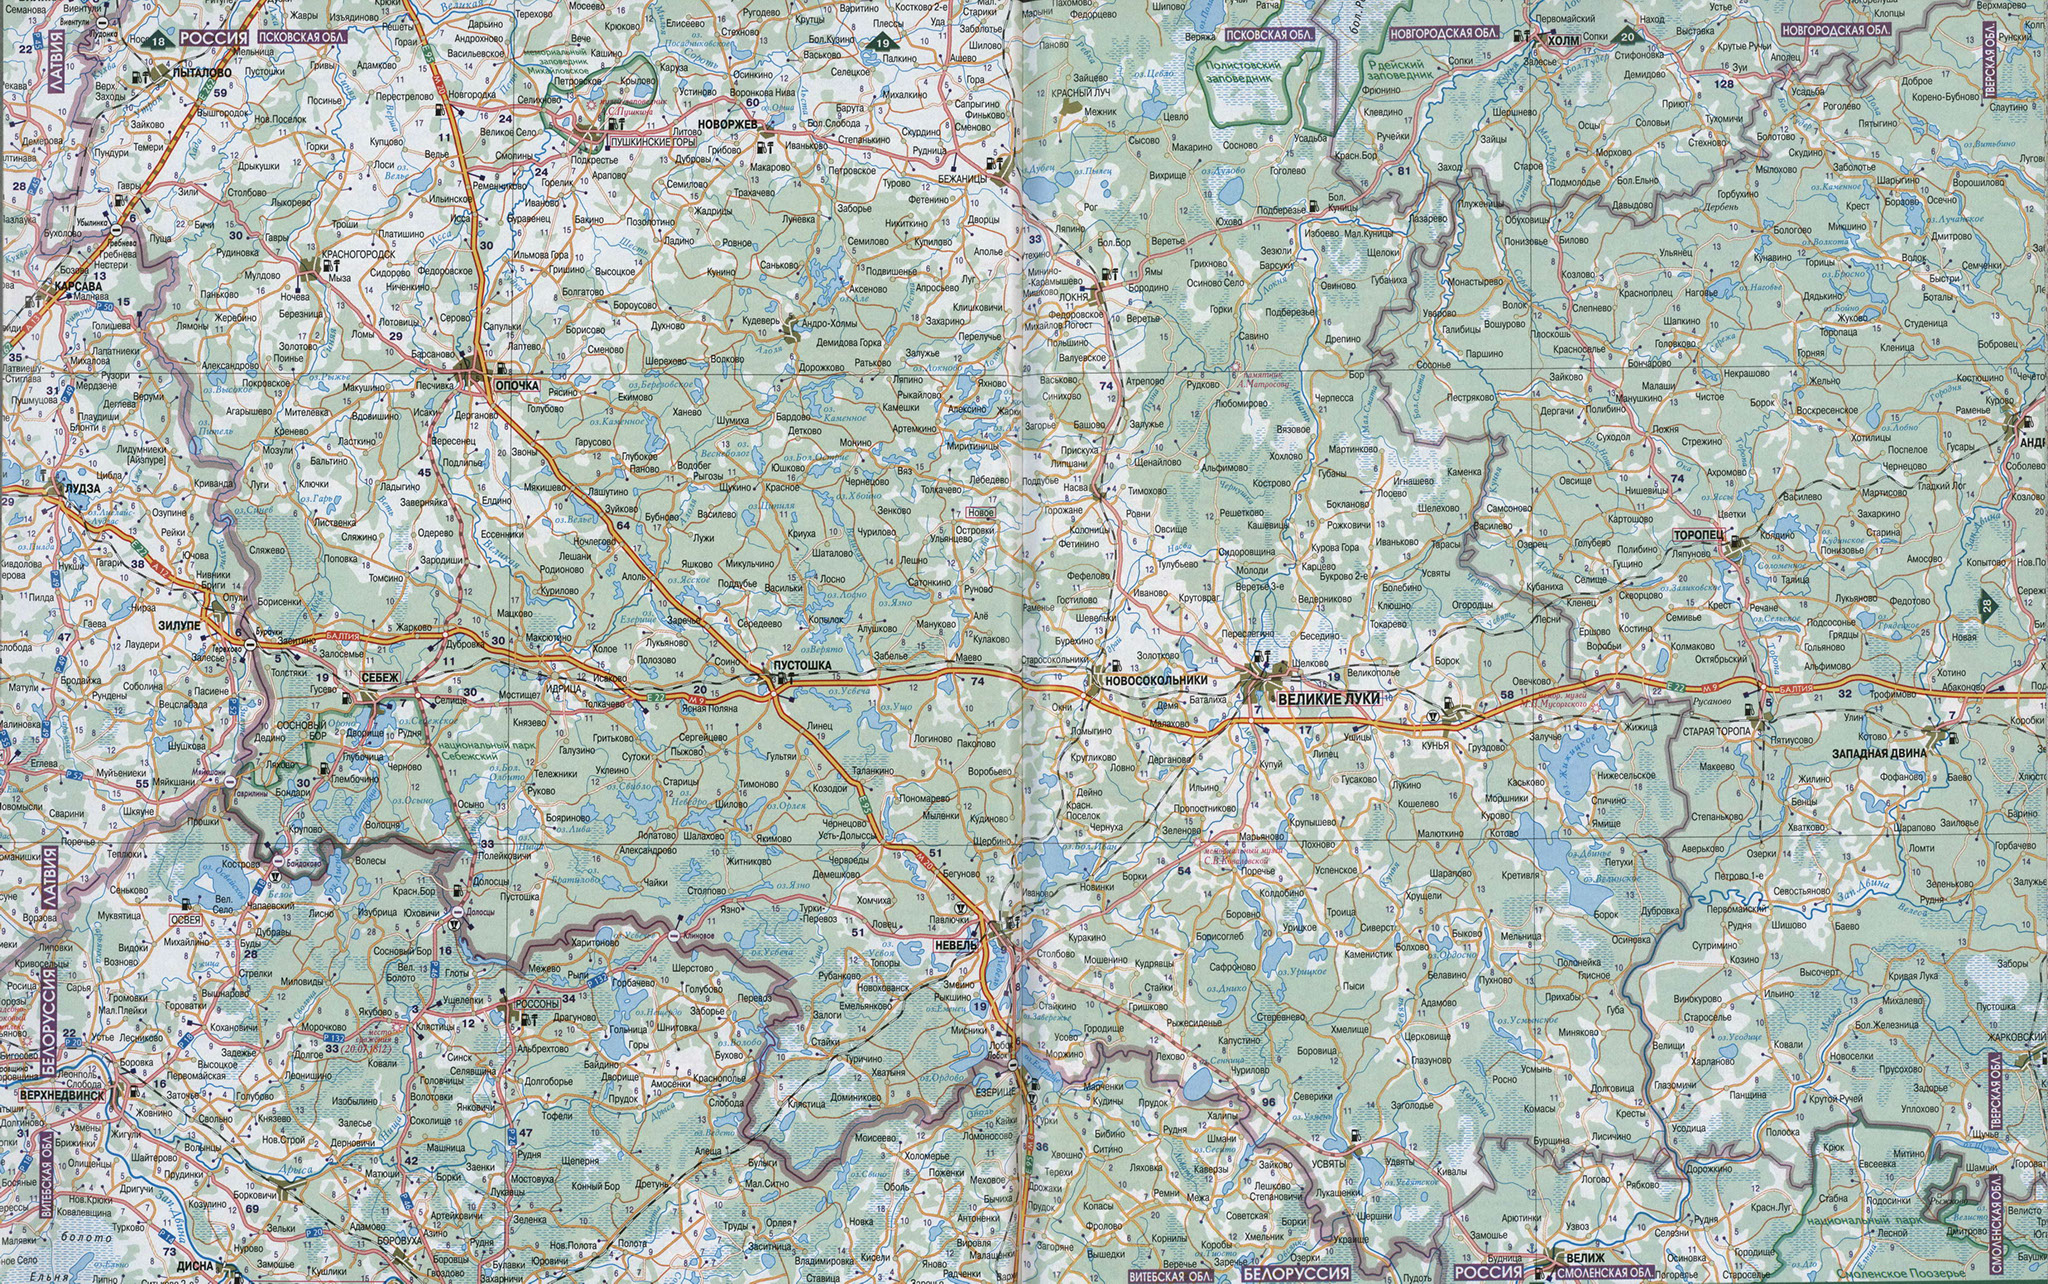 Подробная карта дорог чувашии подробная с дорогами и деревнями